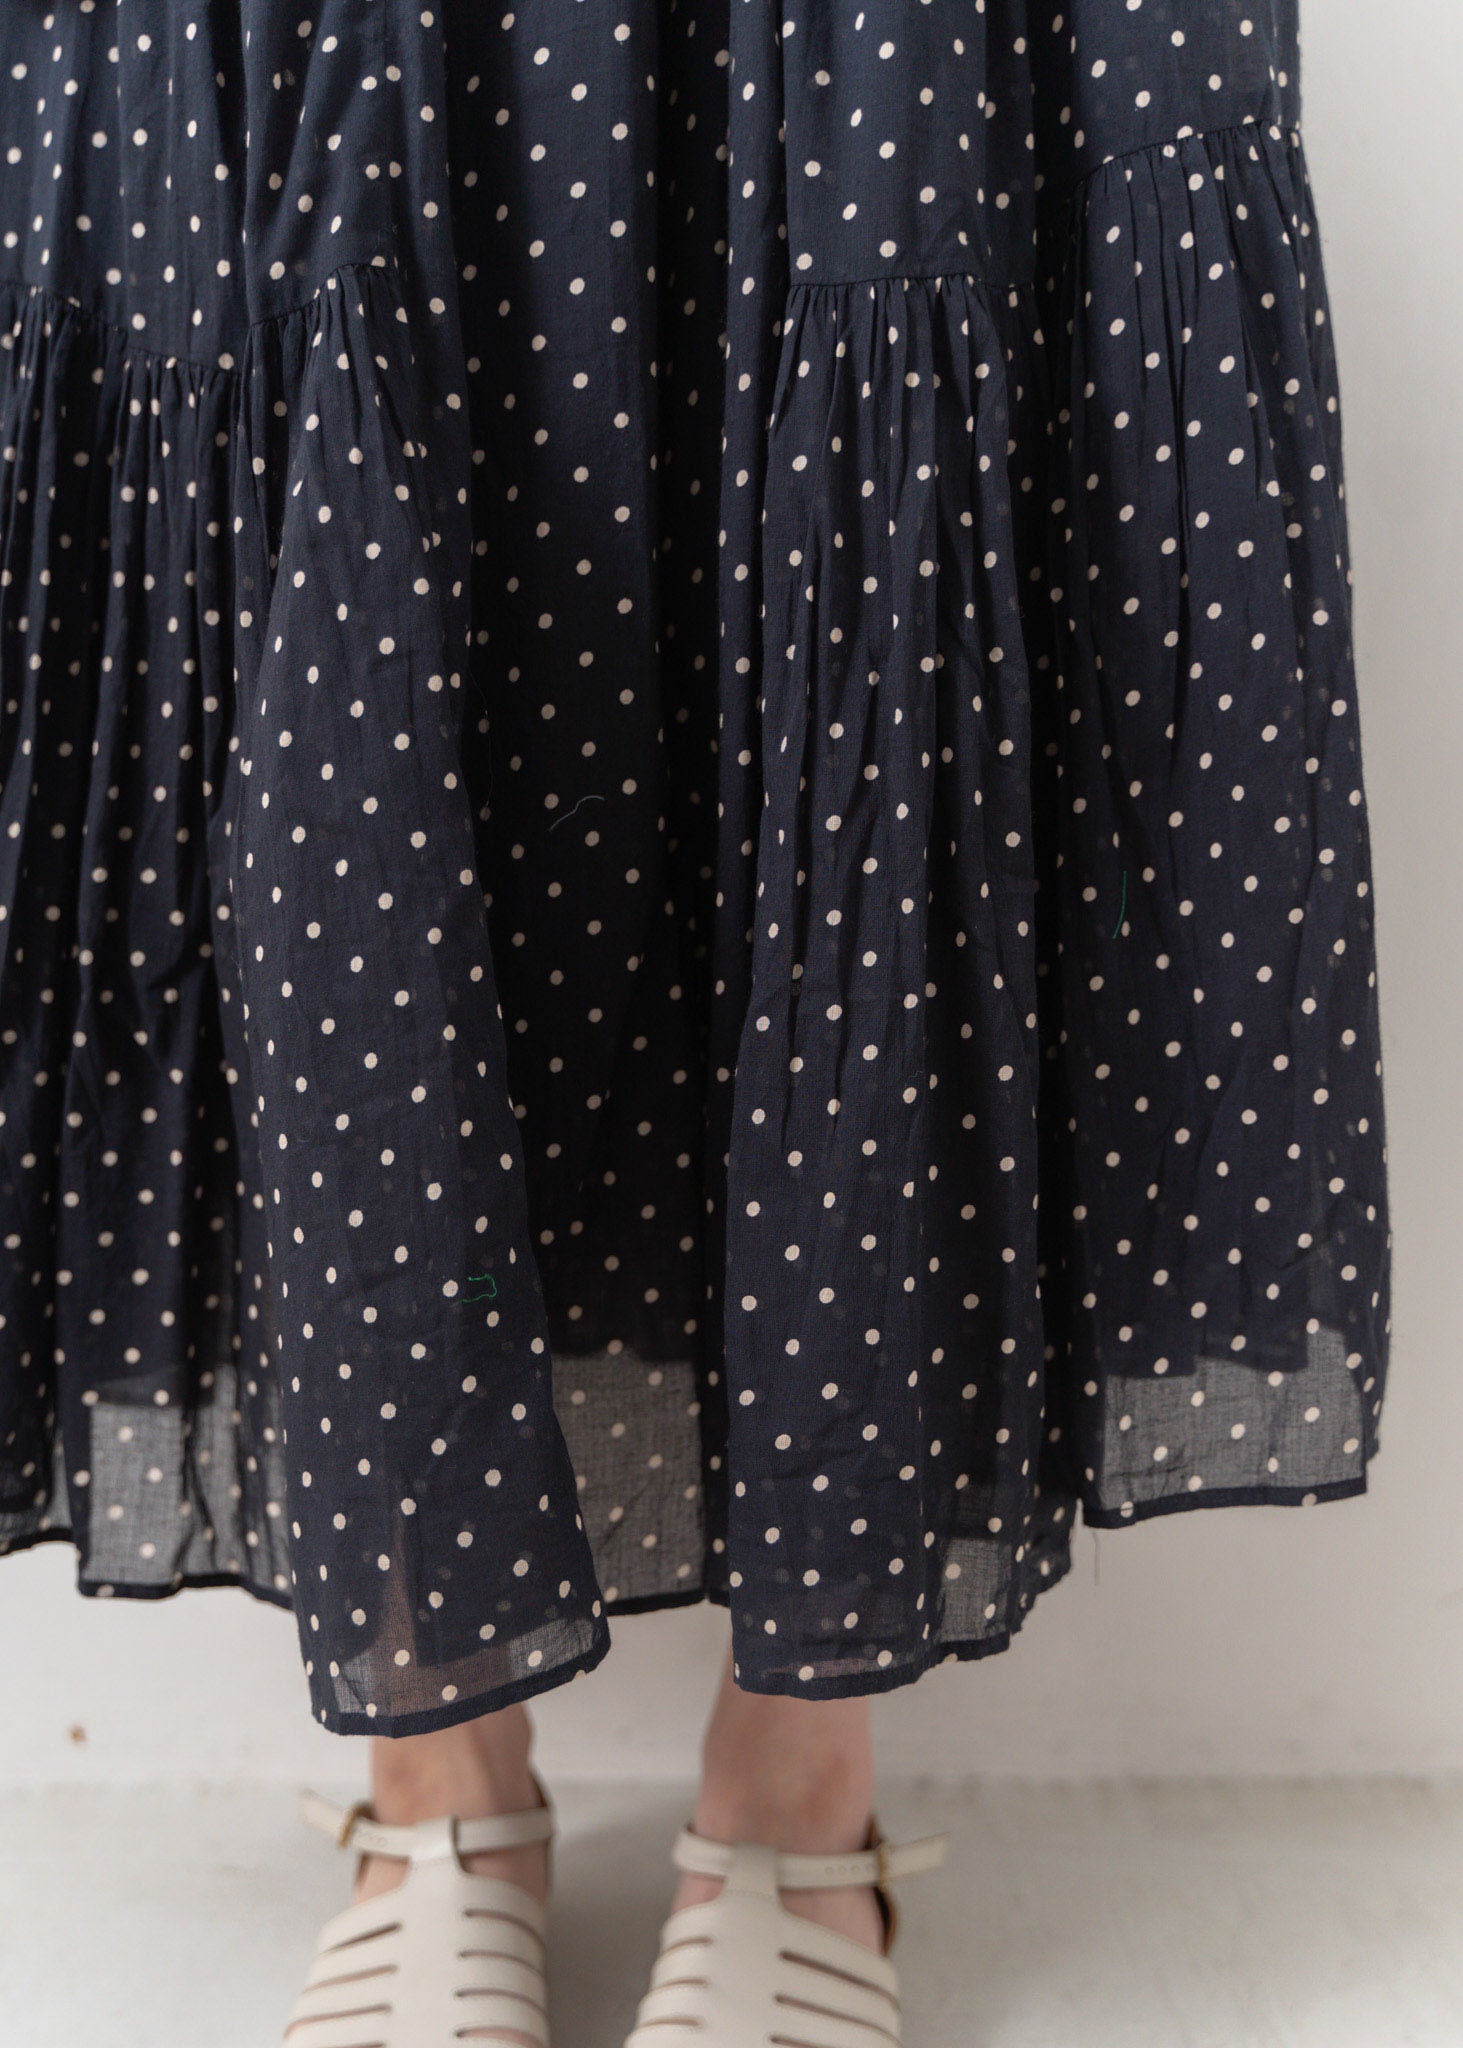 Cotton Voile Dot Print Sleeveless Dress